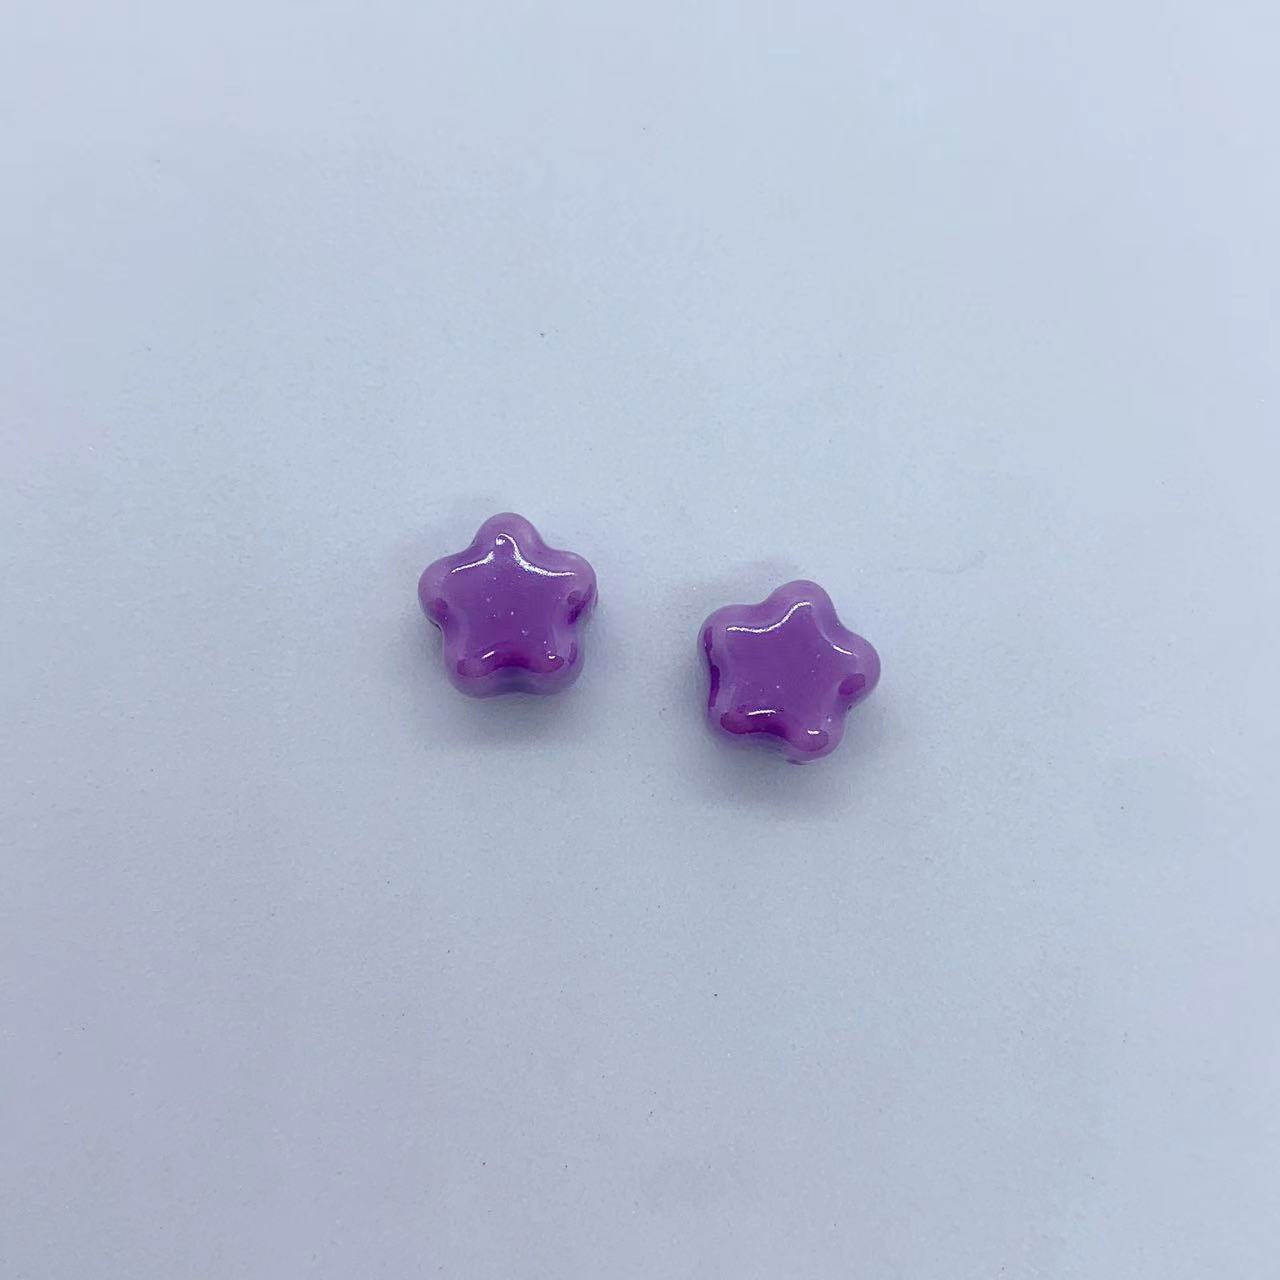 5 light purple